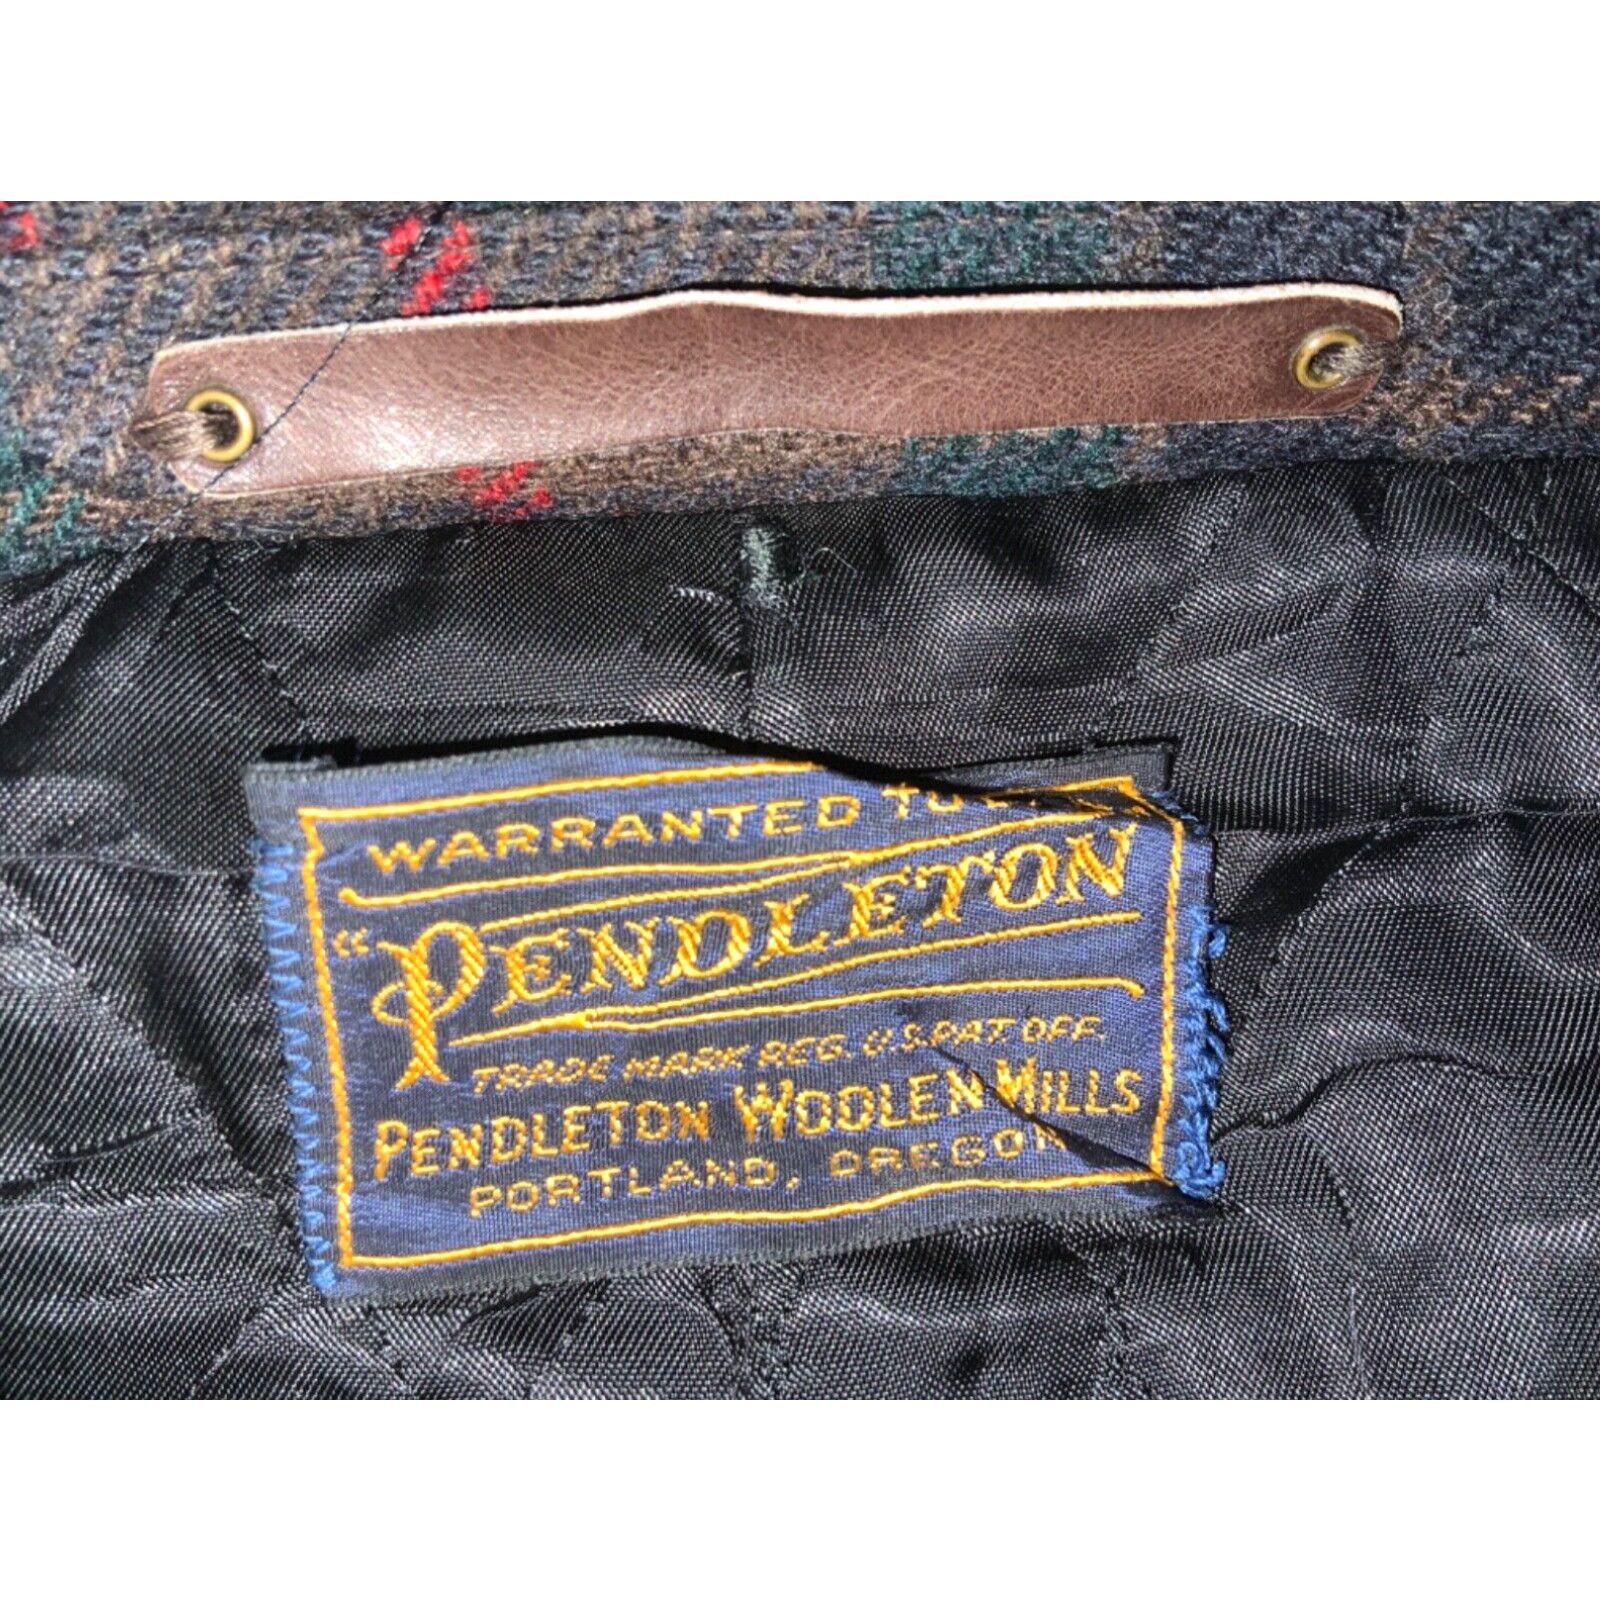 Pendleton Vintage Pendleton Button Up Wool Coat Jacket Size Large Multi Colored Patterned Size US L / EU 52-54 / 3 - 3 Preview